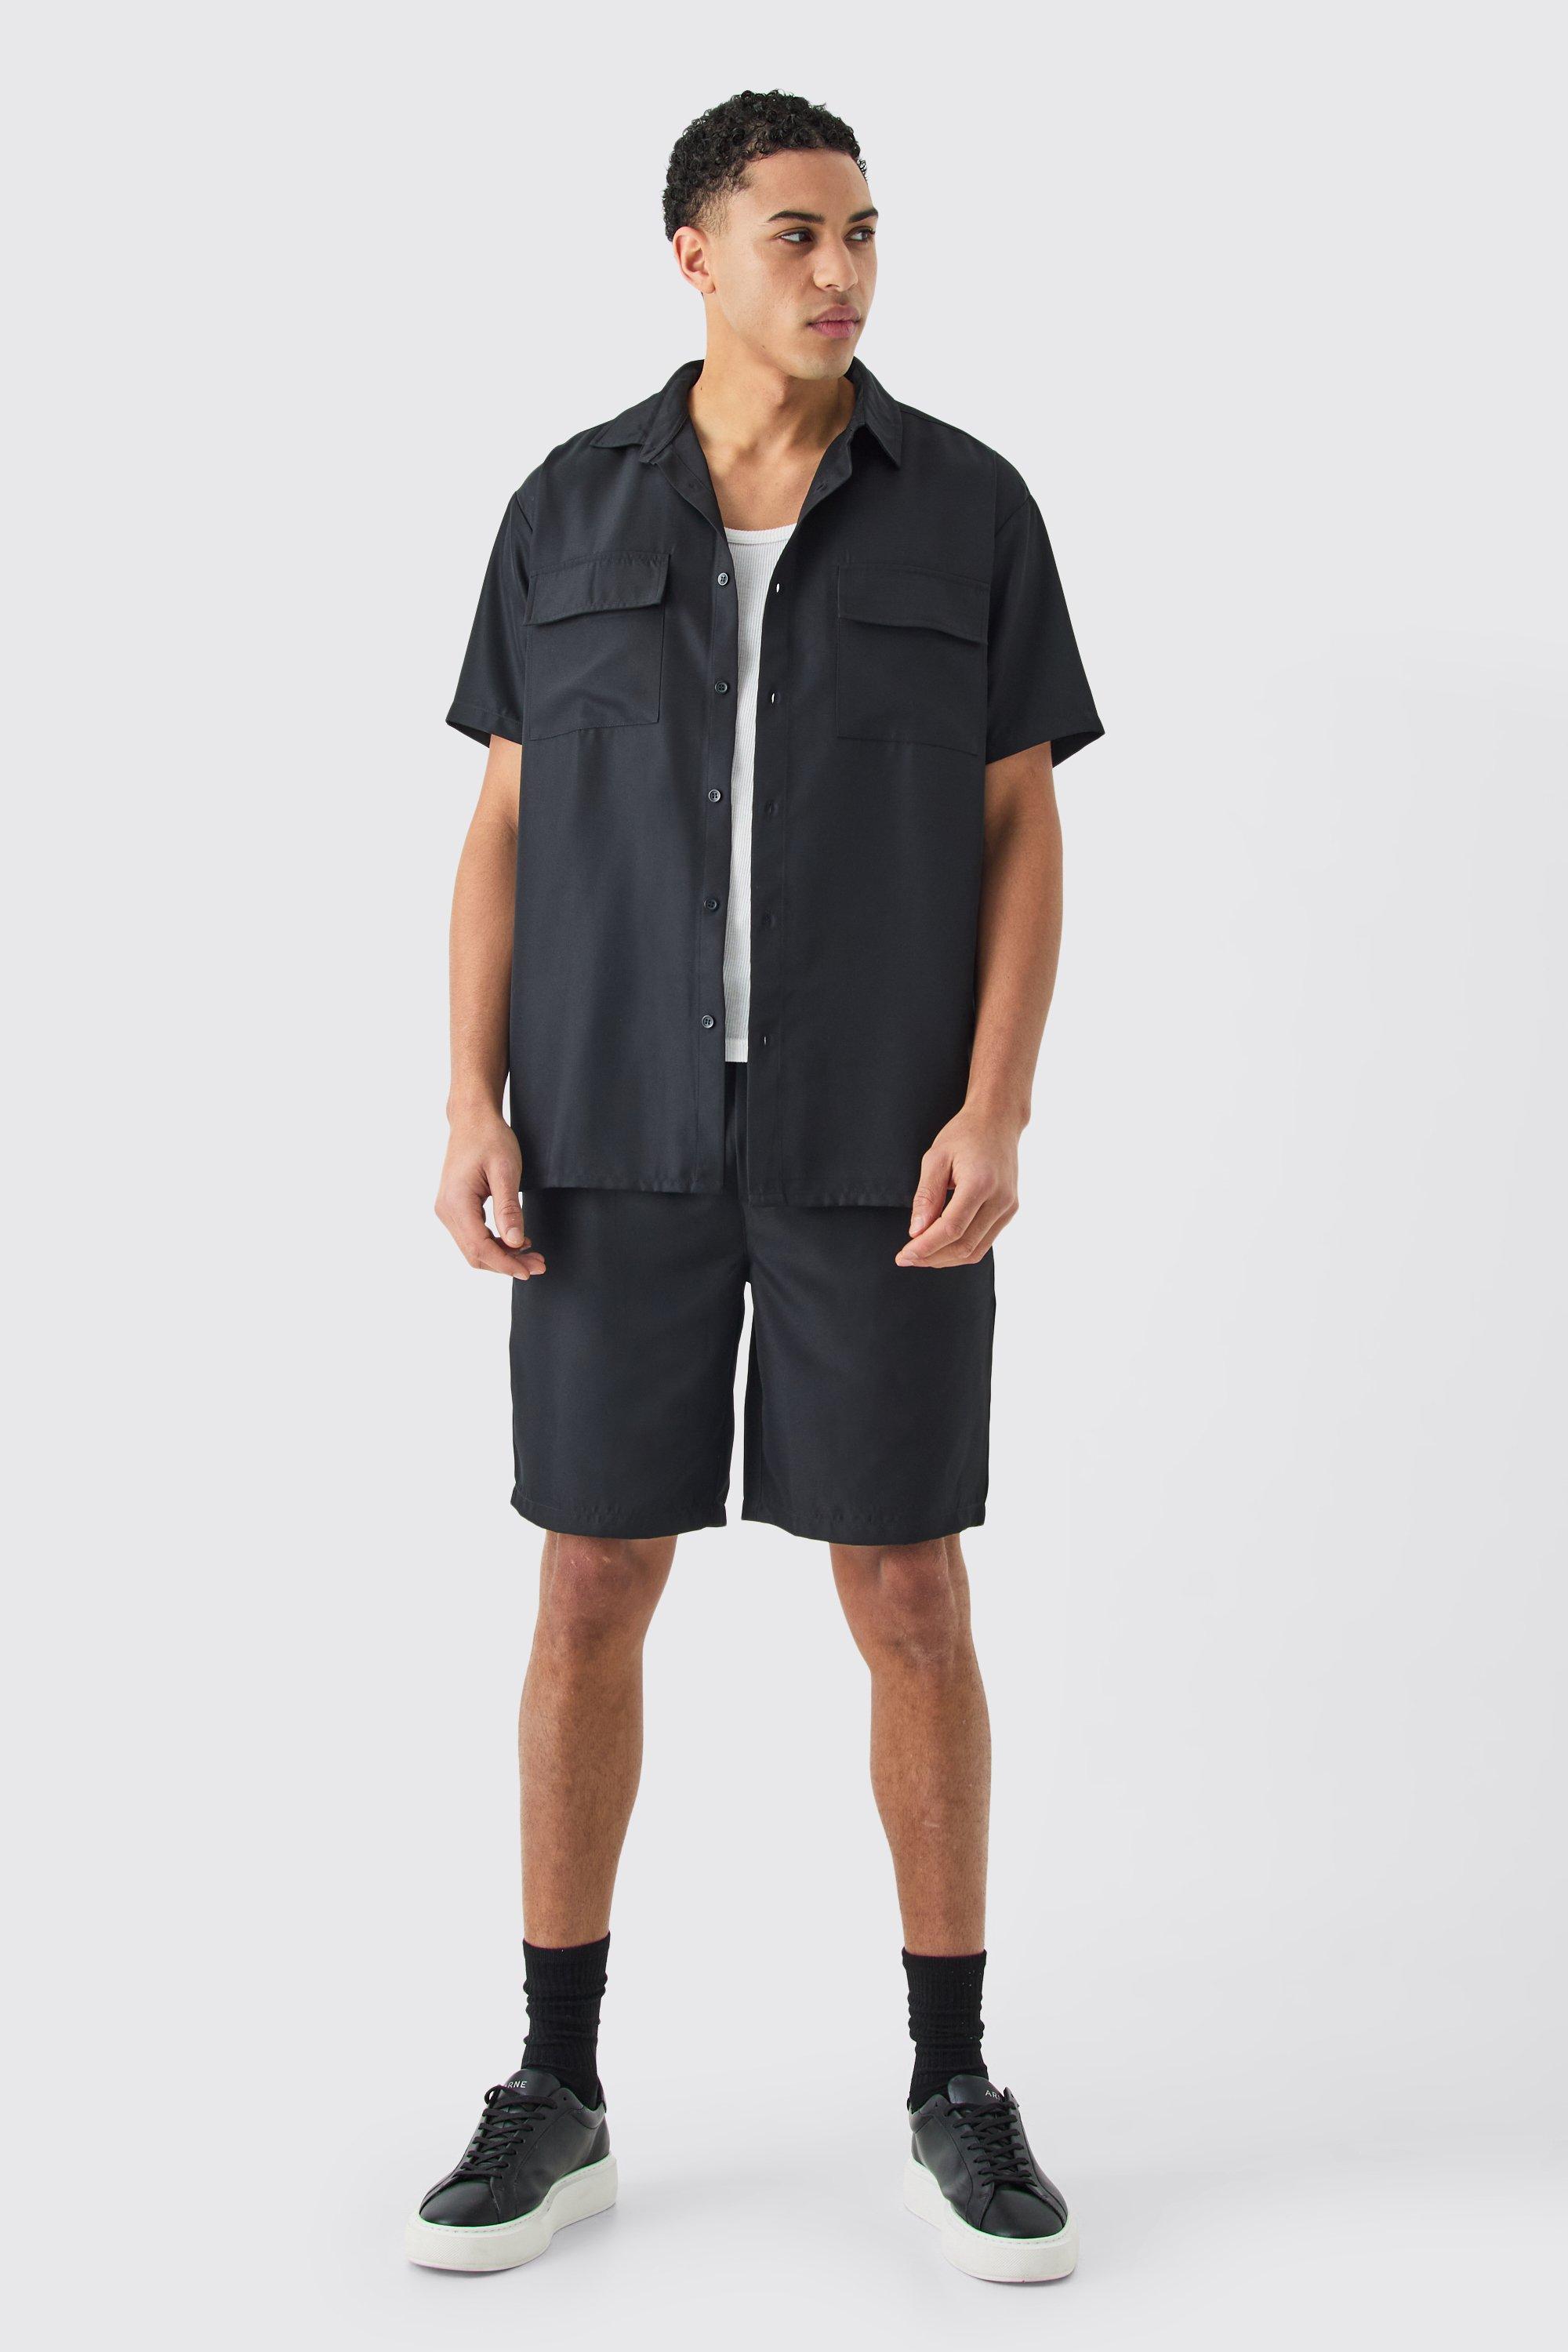 mens black short sleeve soft twill overshirt and short set, black